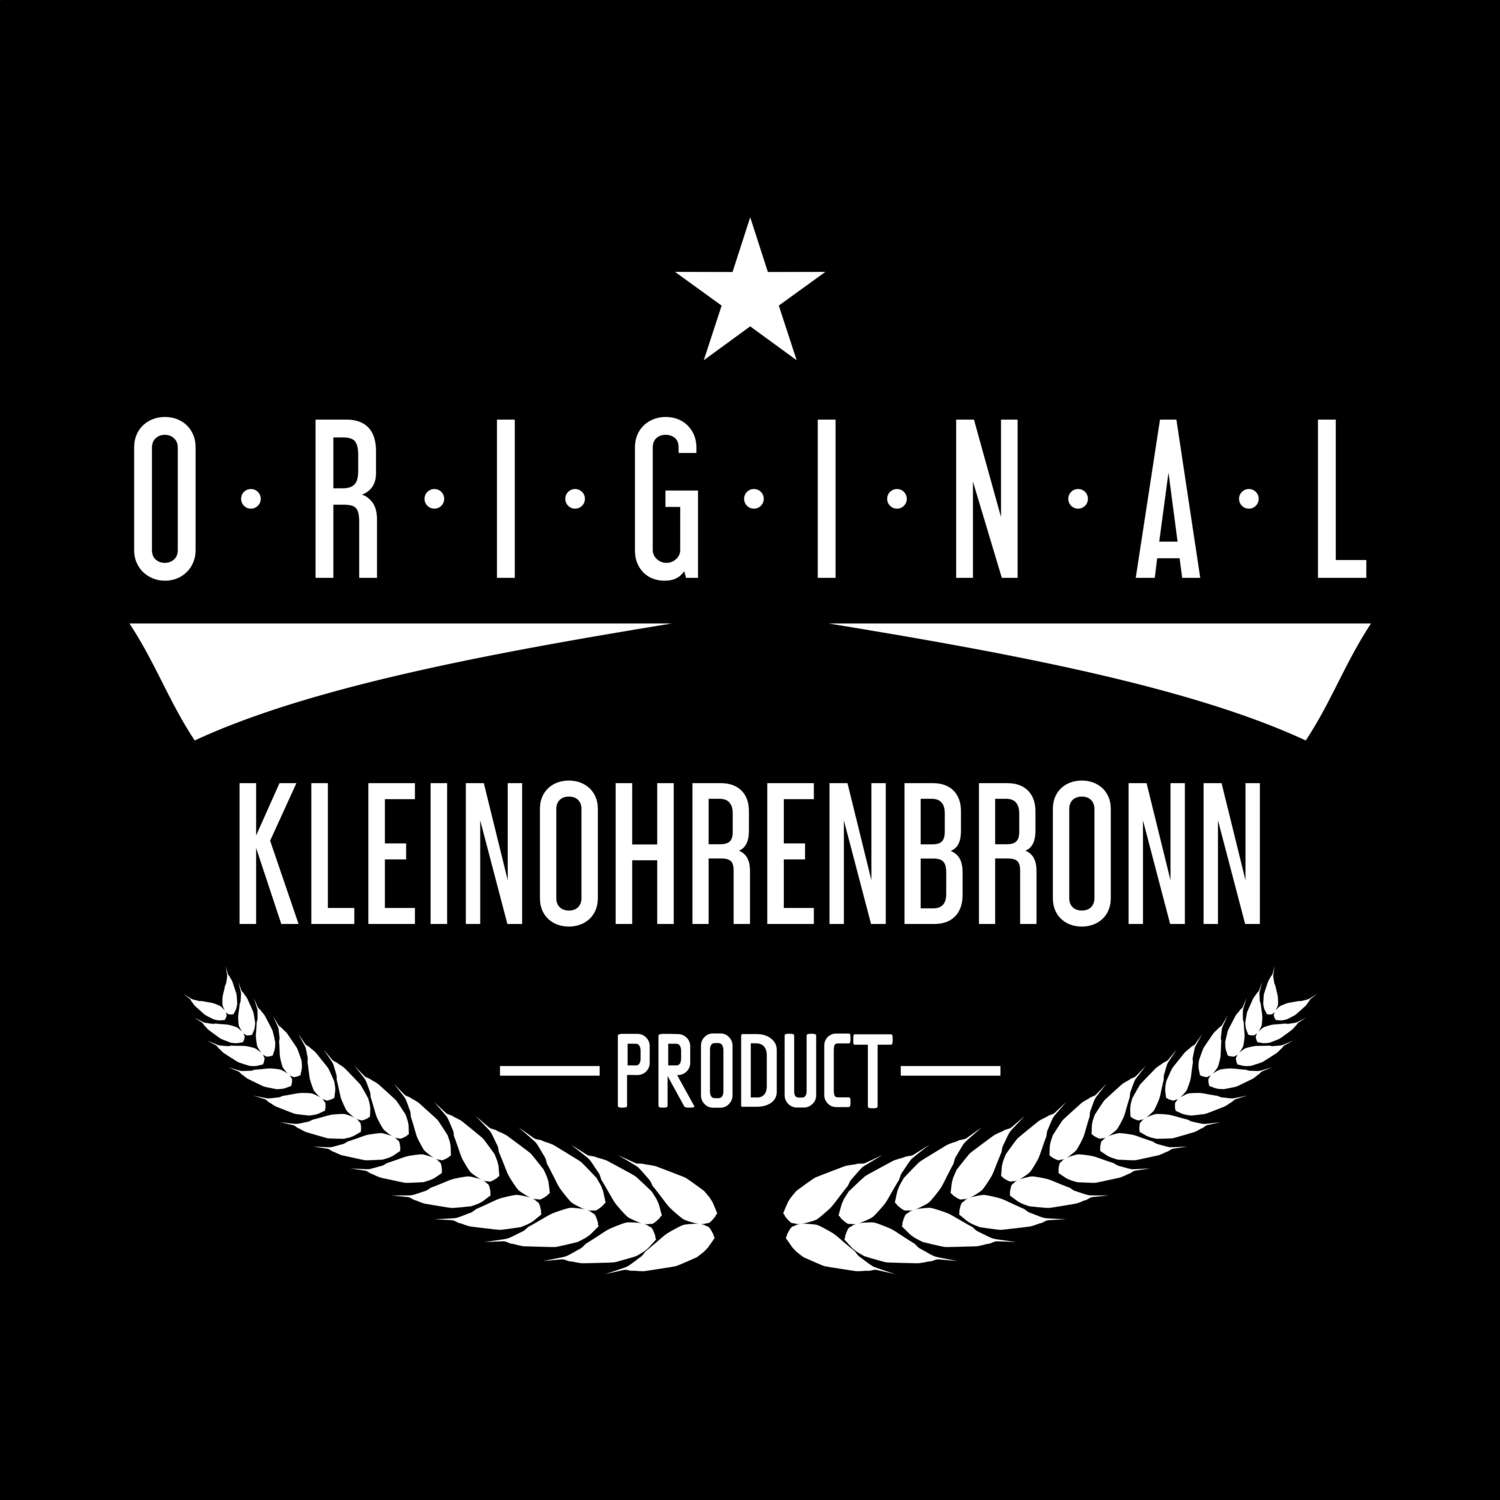 Kleinohrenbronn T-Shirt »Original Product«